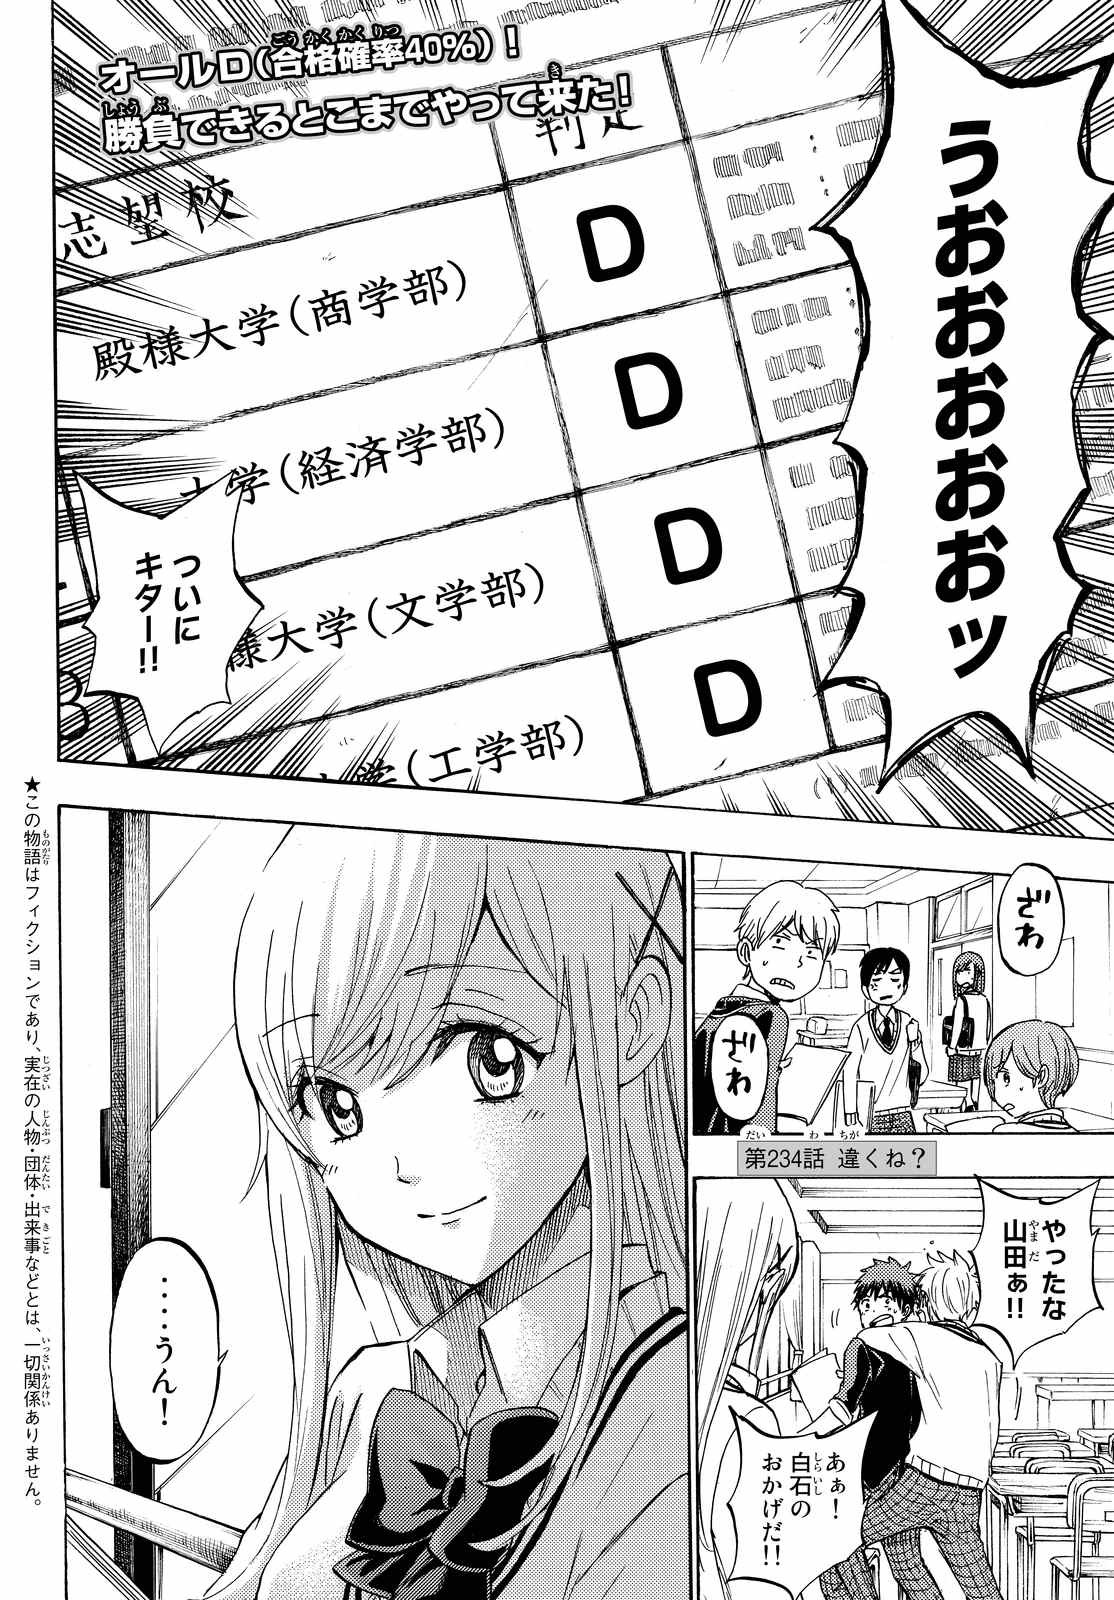 Yamada-kun to 7-nin no Majo - Chapter 234 - Page 2